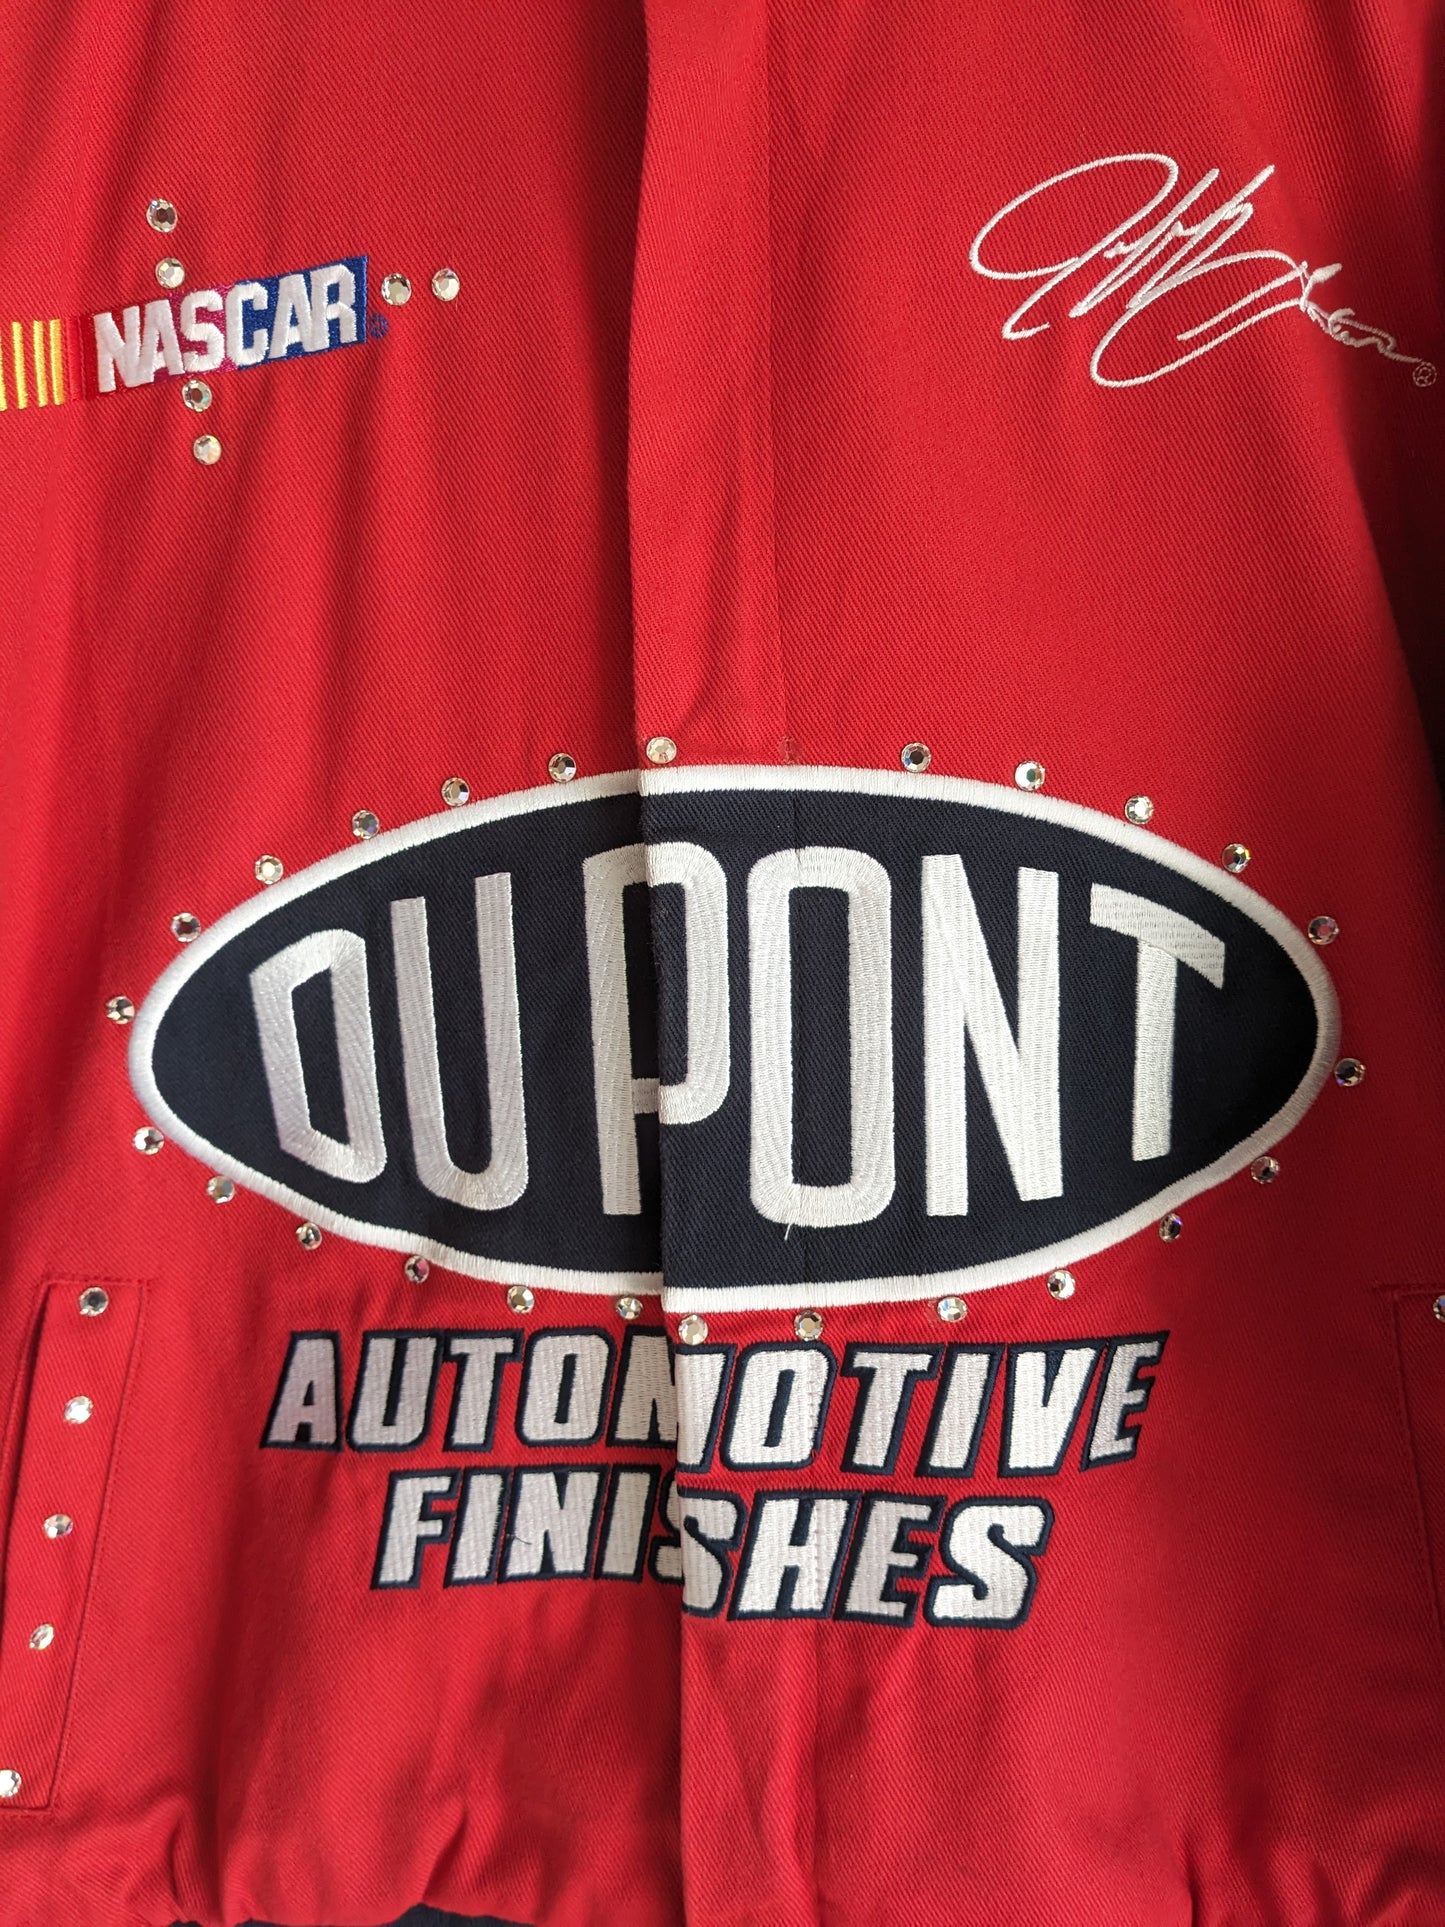 Dupont Jeff Gordon Nascar Racing Jacket